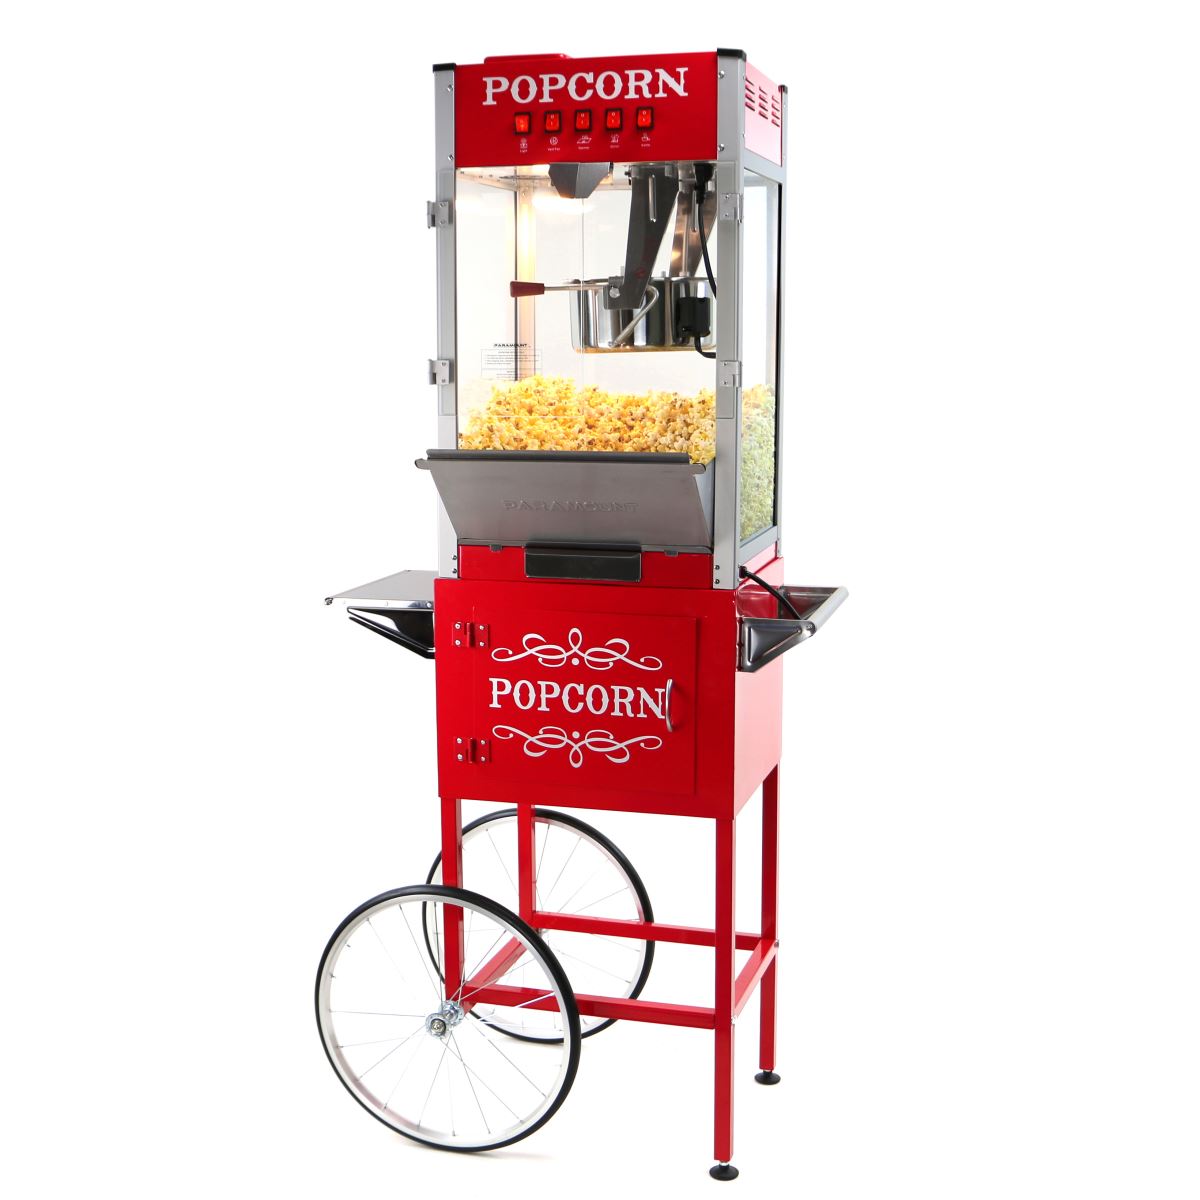 Popcorn Machine Party Rentals in North County CA,